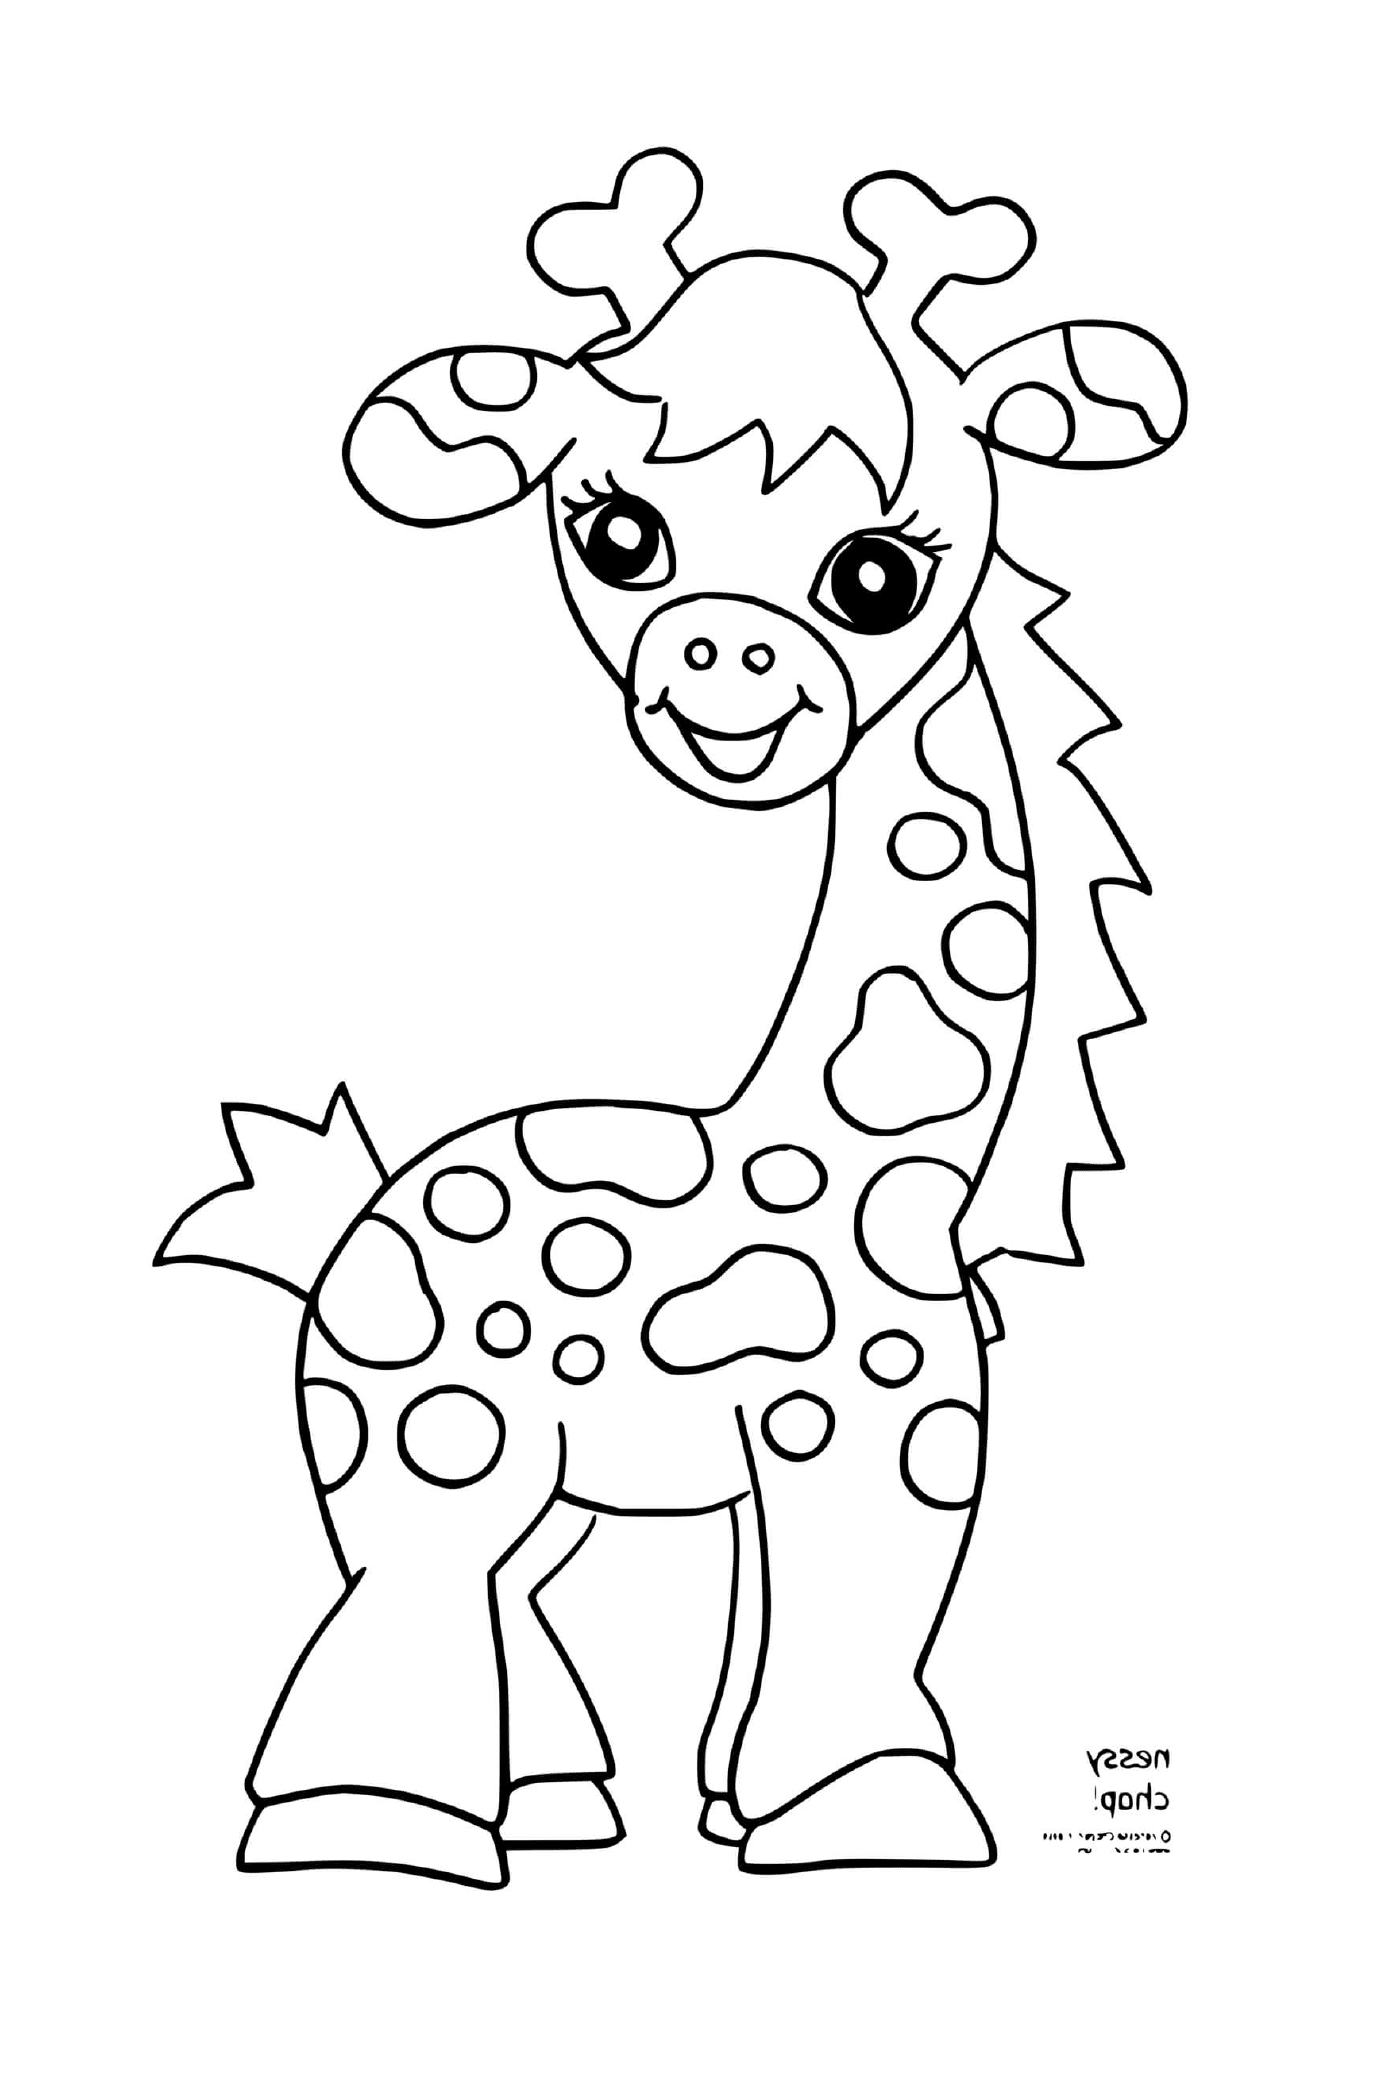  Girafa sorrindo com olhos bonitos 